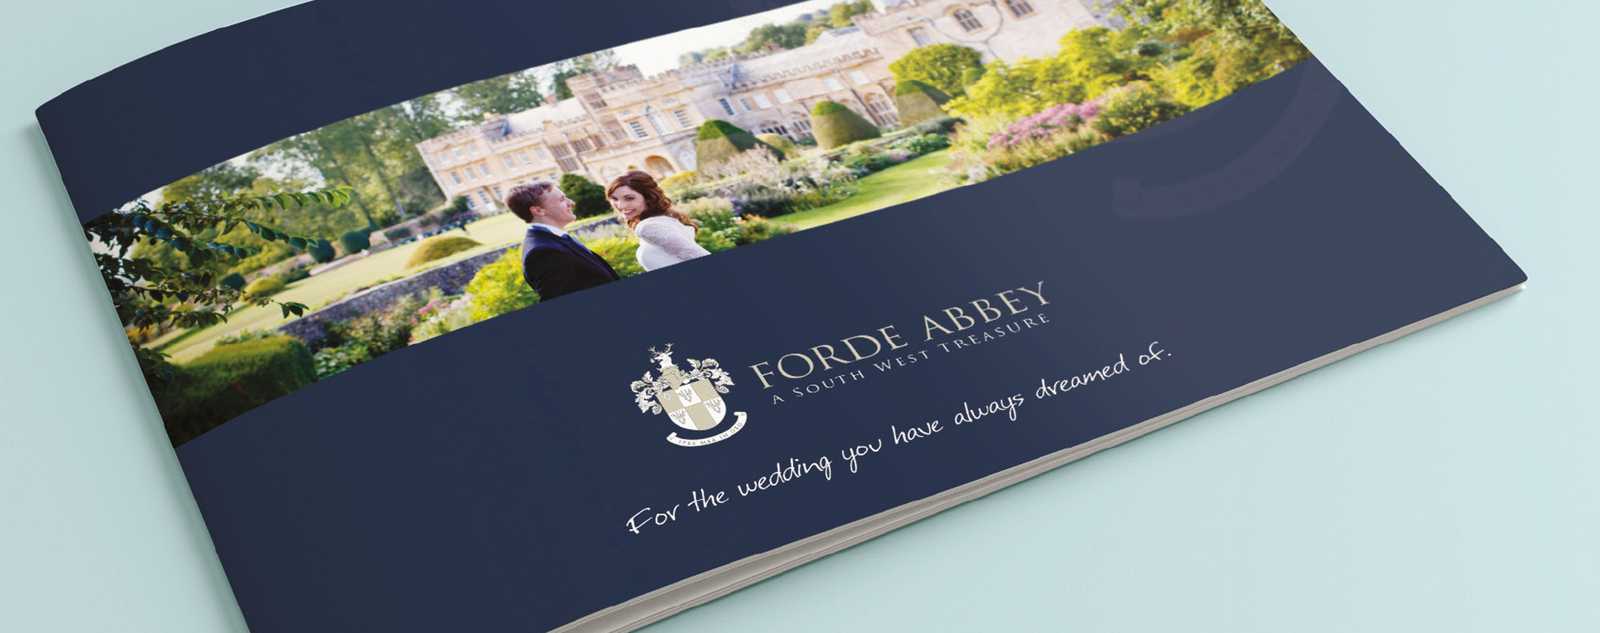 Brochure Design for Forde Abbey